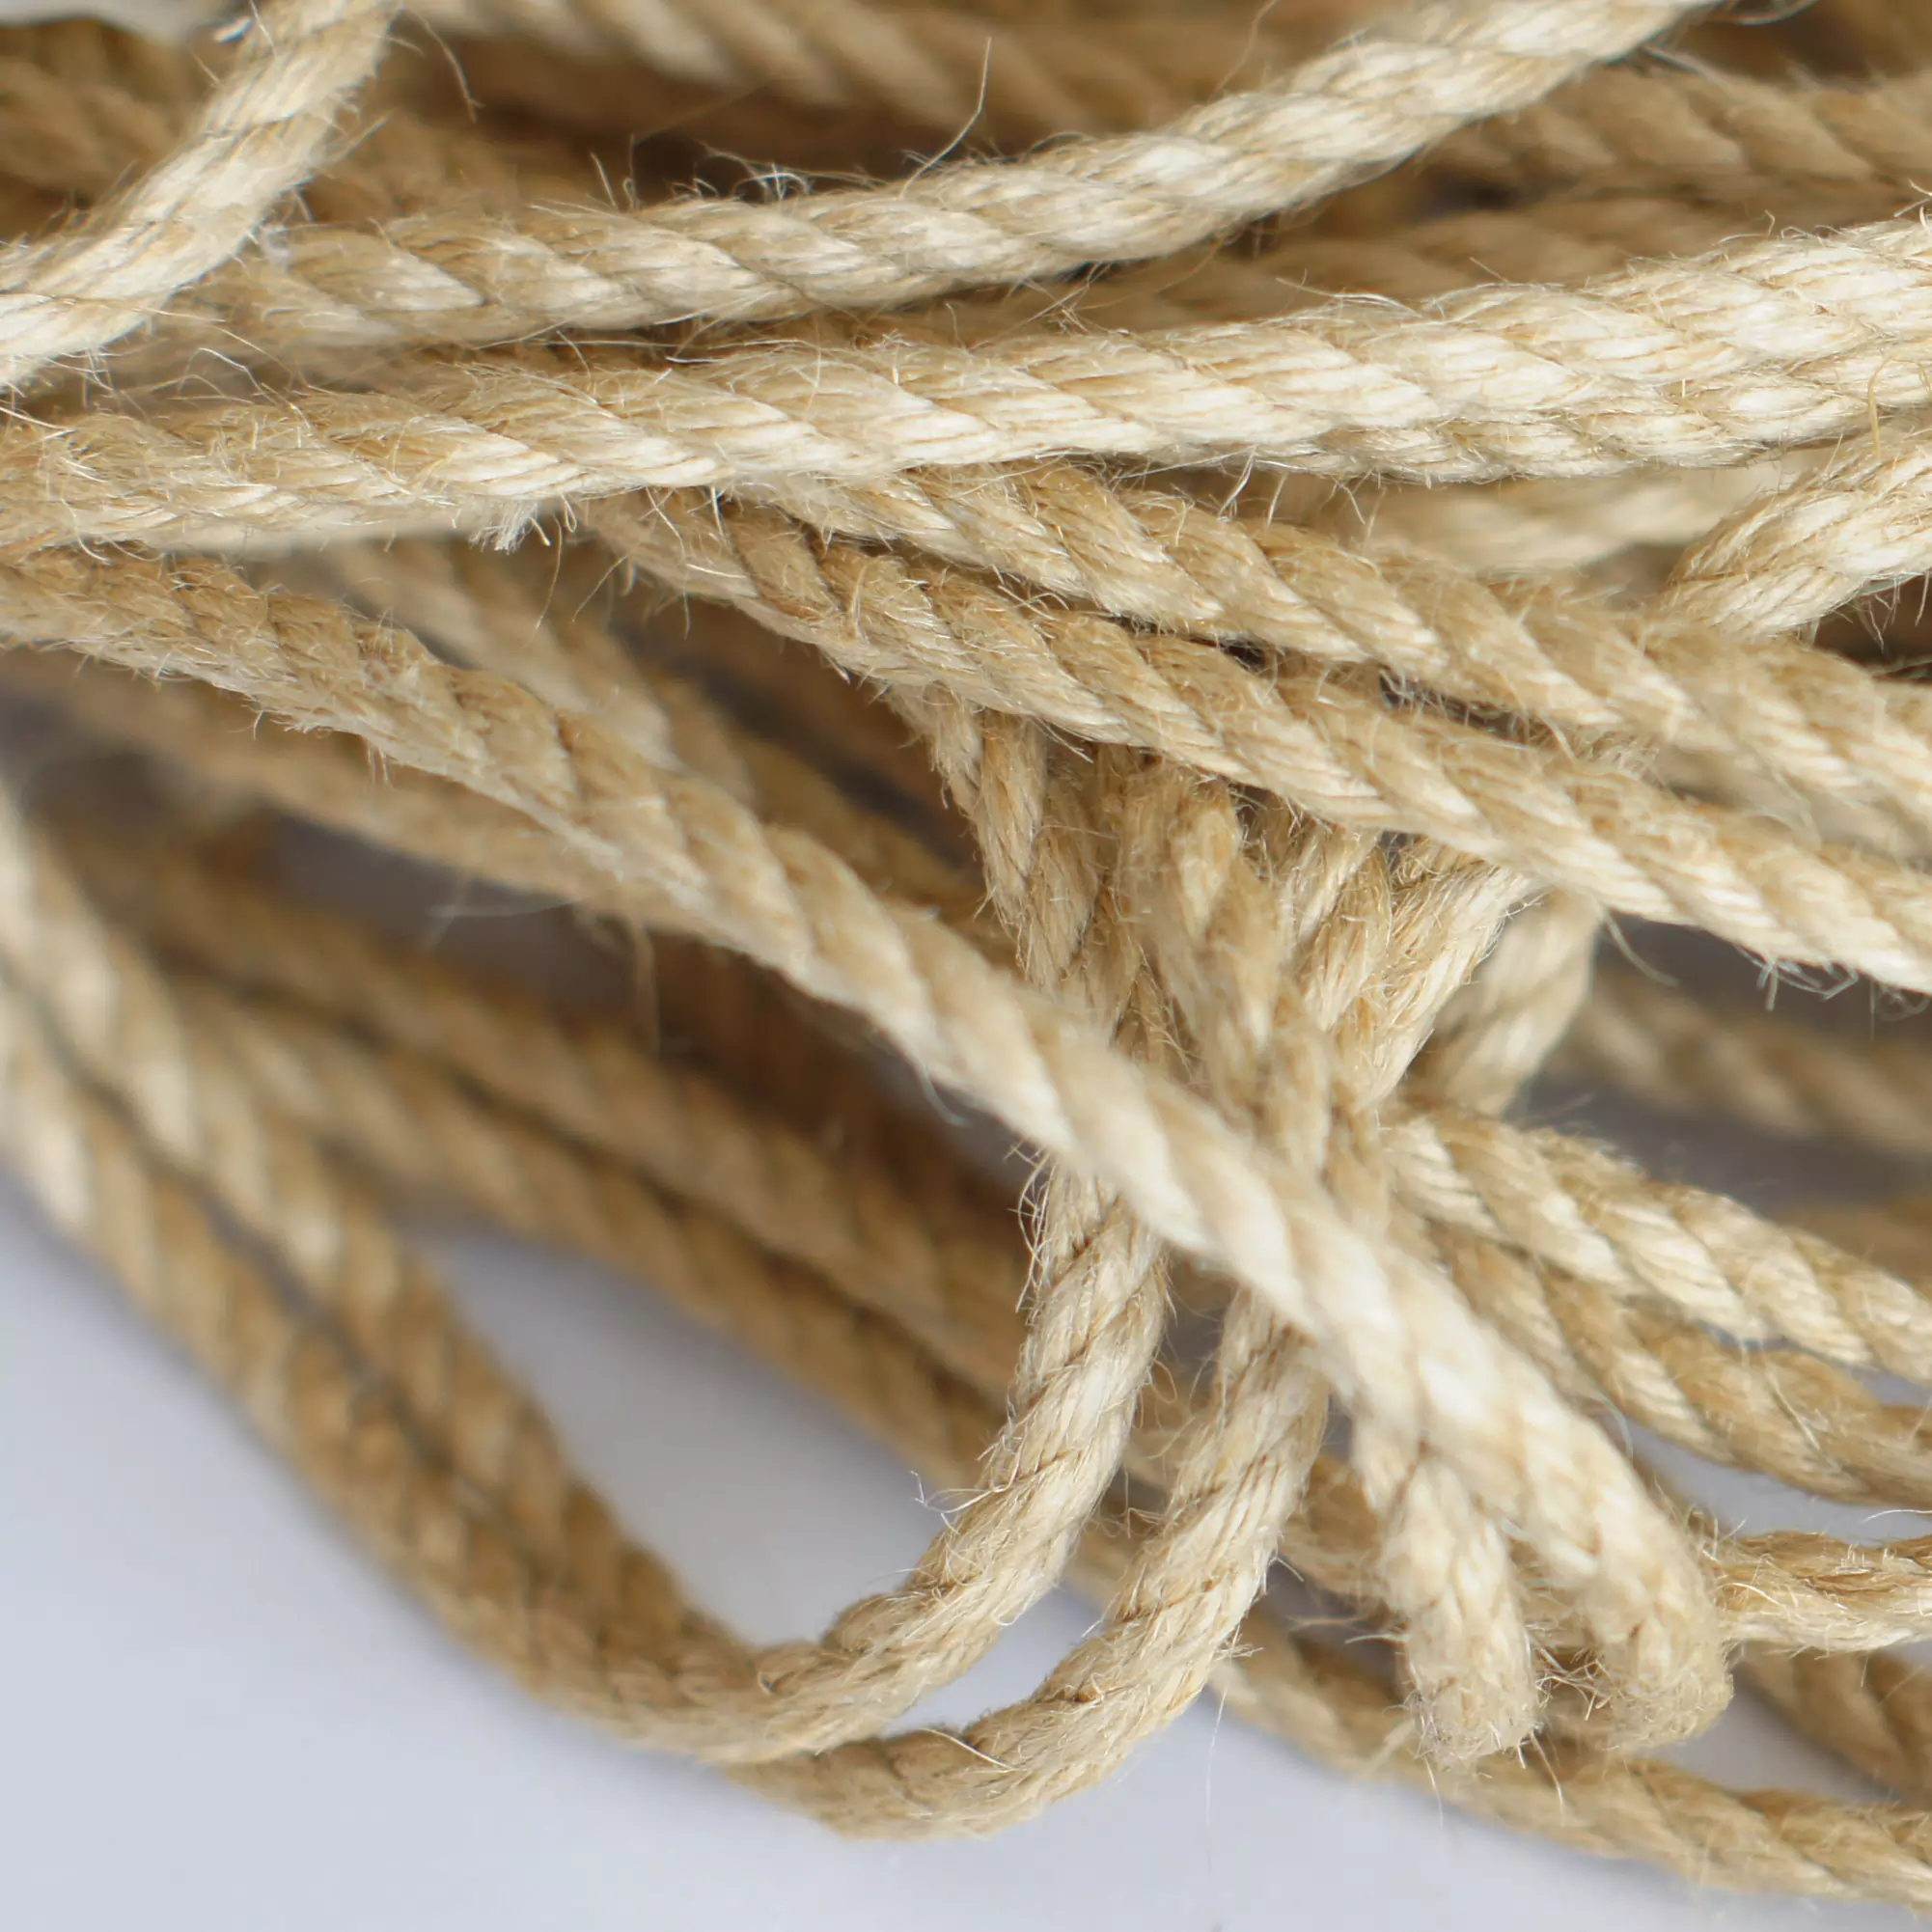 Turning raw jute ropes into deliciously soft pliable ropes for bondage